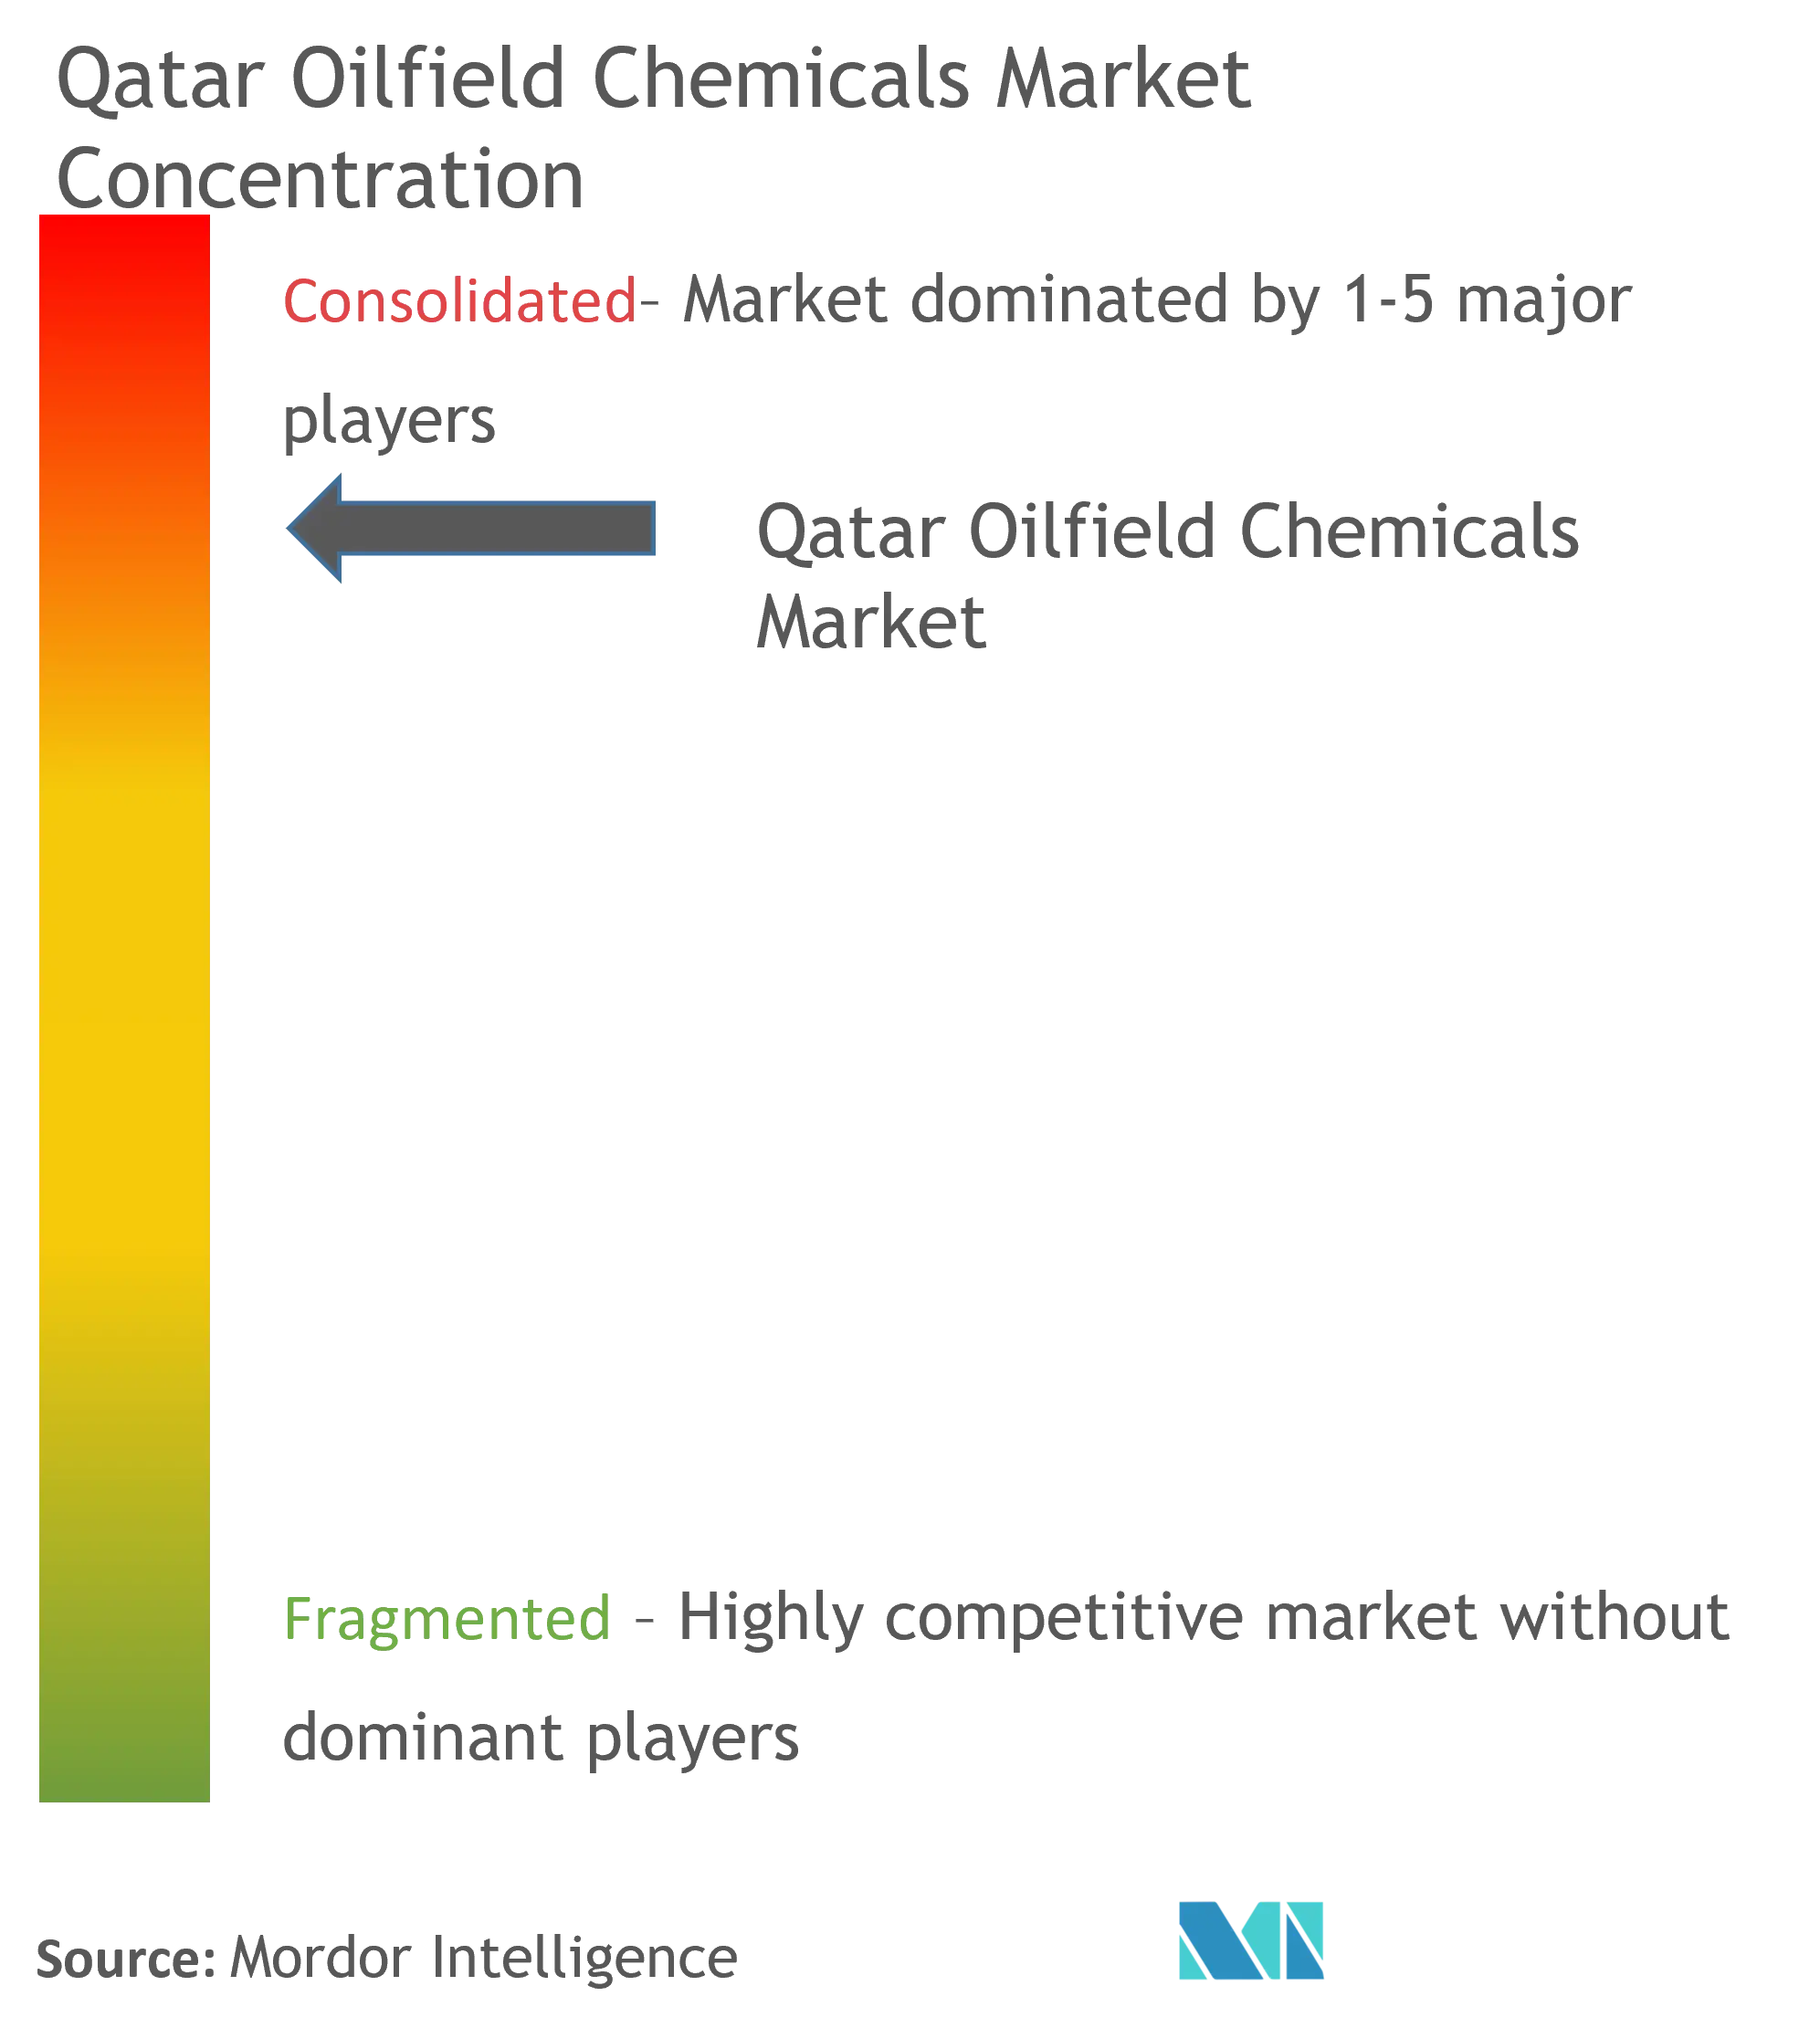 Market Concentration - Qatar Oilfield Chemicals Market.png